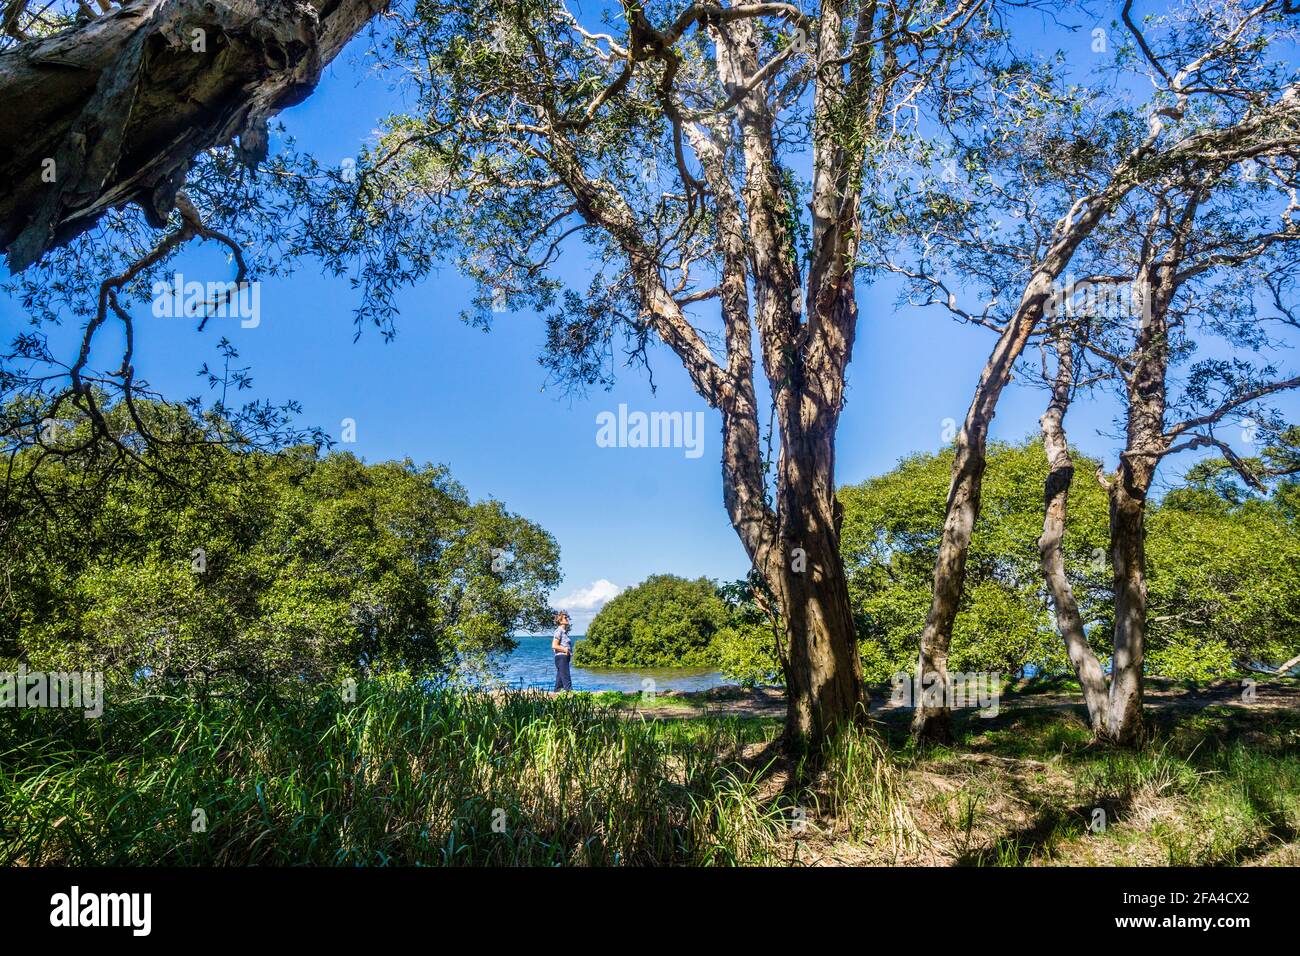 mangroves on the shore of Moreton Bay at Godwin Beach Environment Reserve, Moreton Bay Region, Queensland, Australia Stock Photo